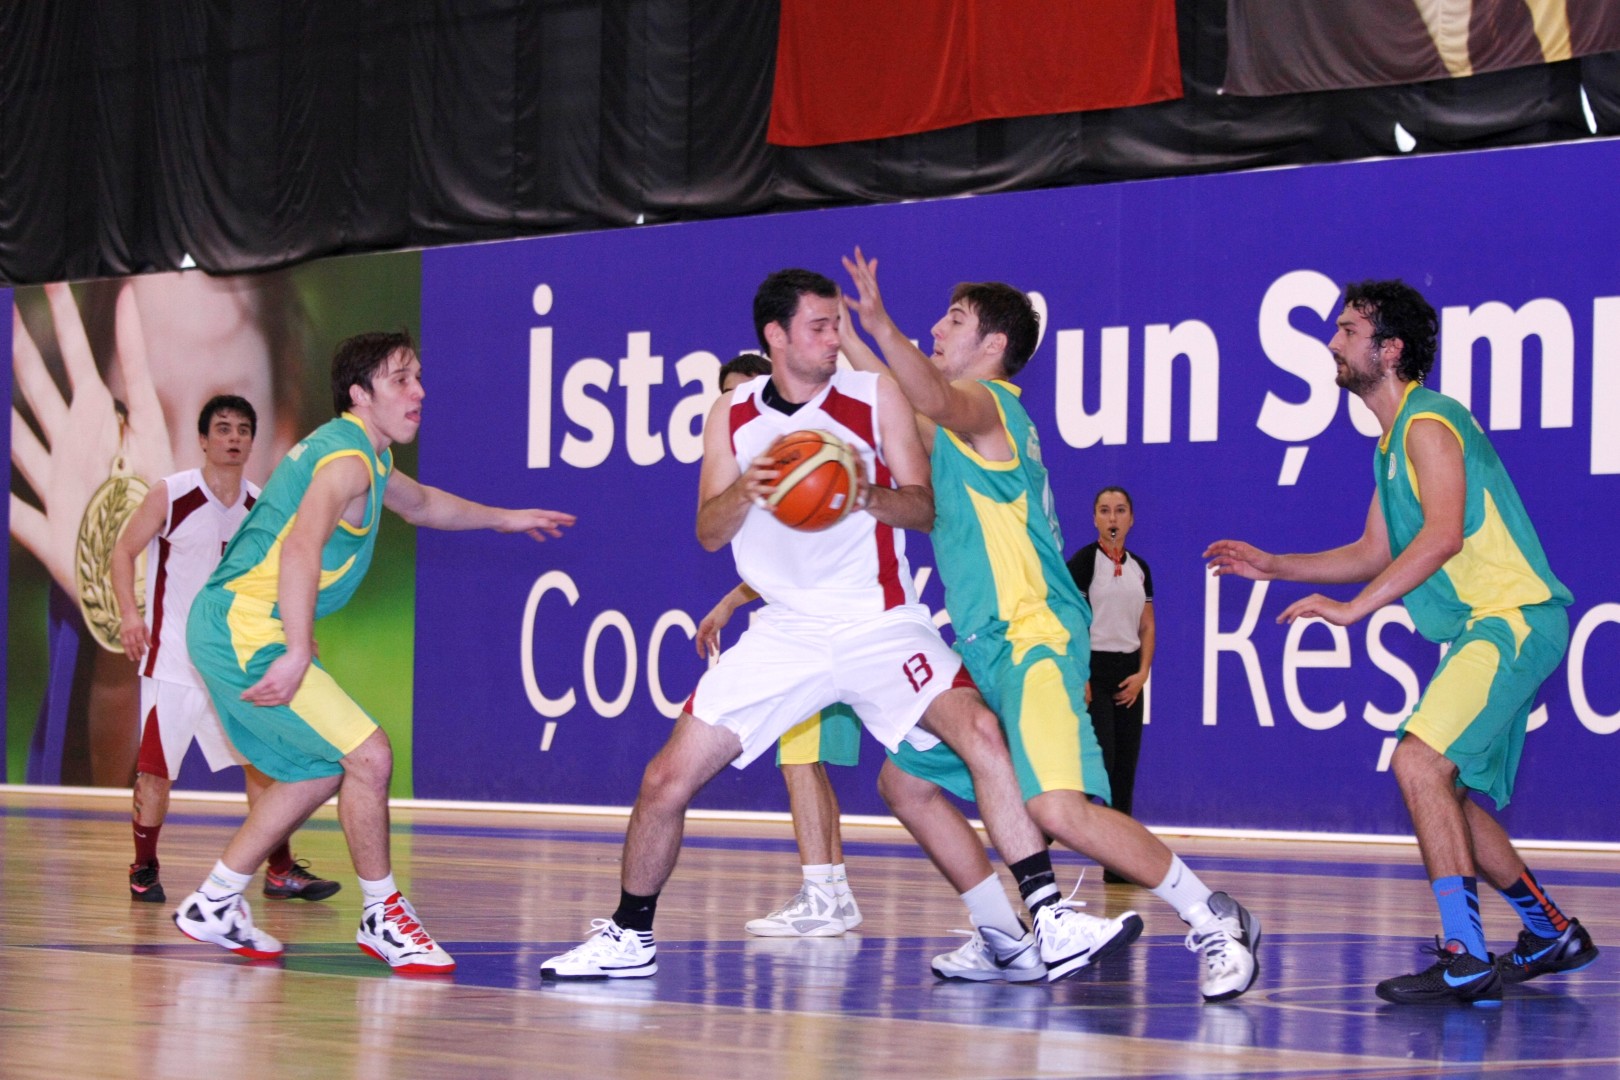 ibb universiteler arasi spor soleni unisporfest 2013 istanbul ibb ibbpr sport intercollegiate universities basketball court sports court